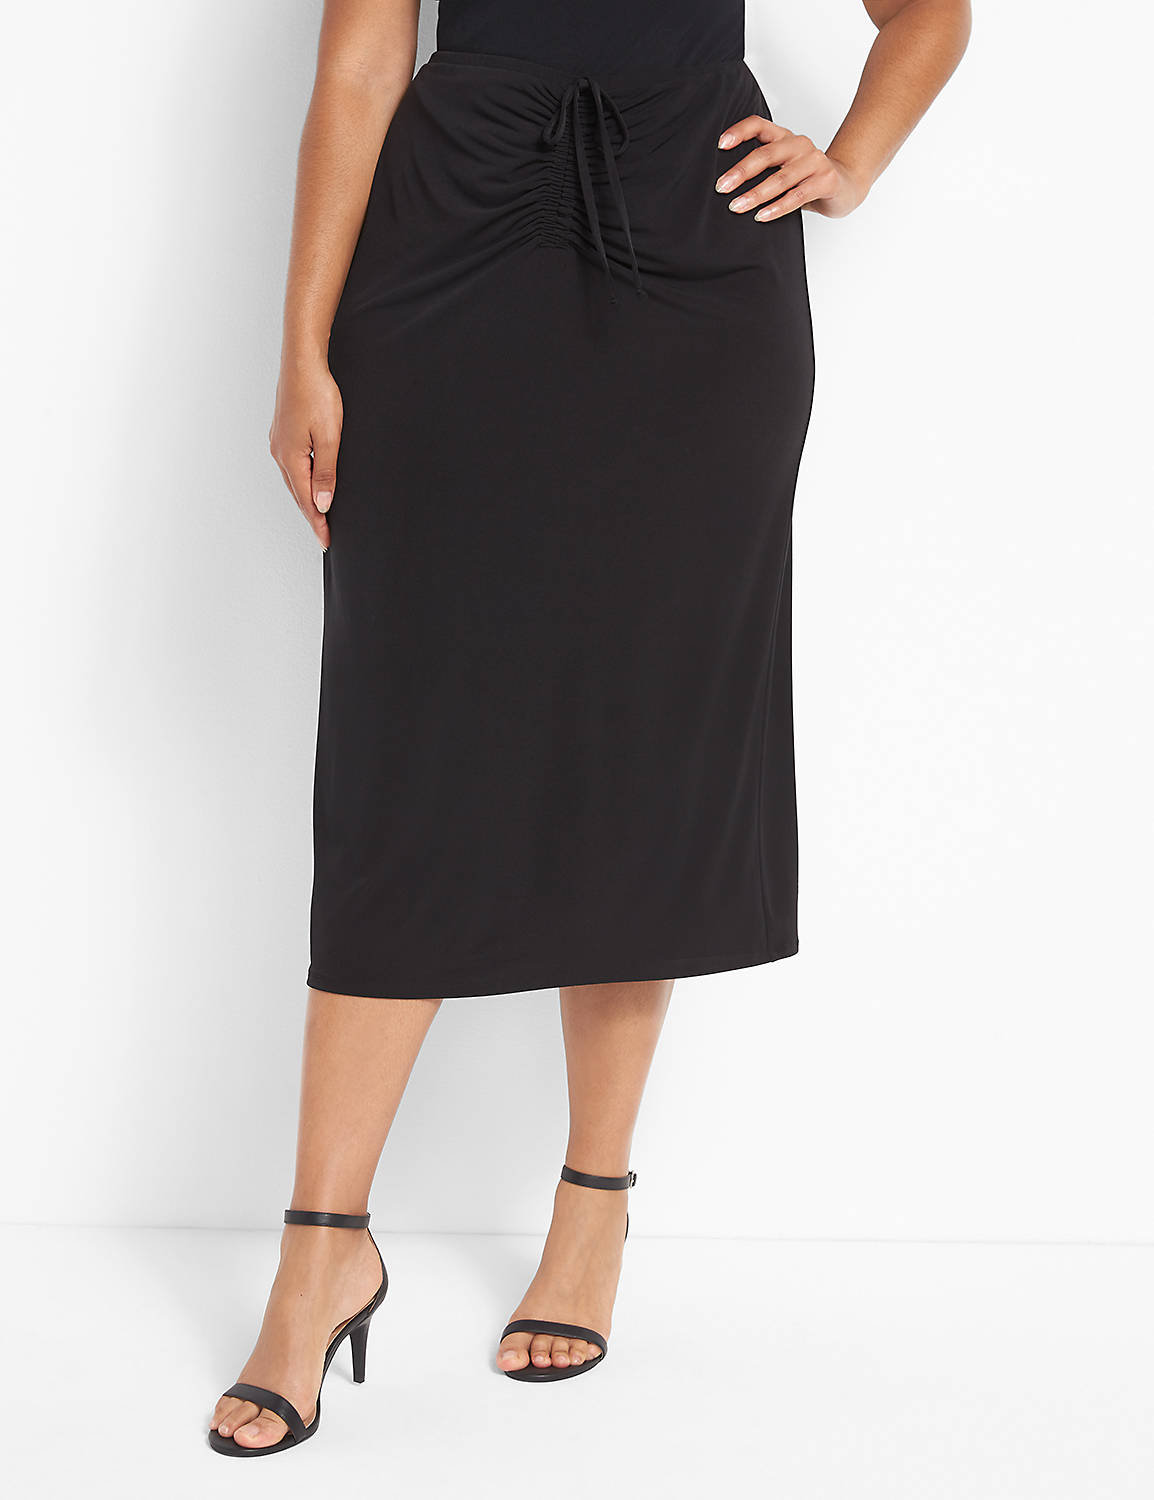 Long Sleeve V Neck Ruched Front Top And Skirt Set 1124184:Ascena Black:26/28 Product Image 4